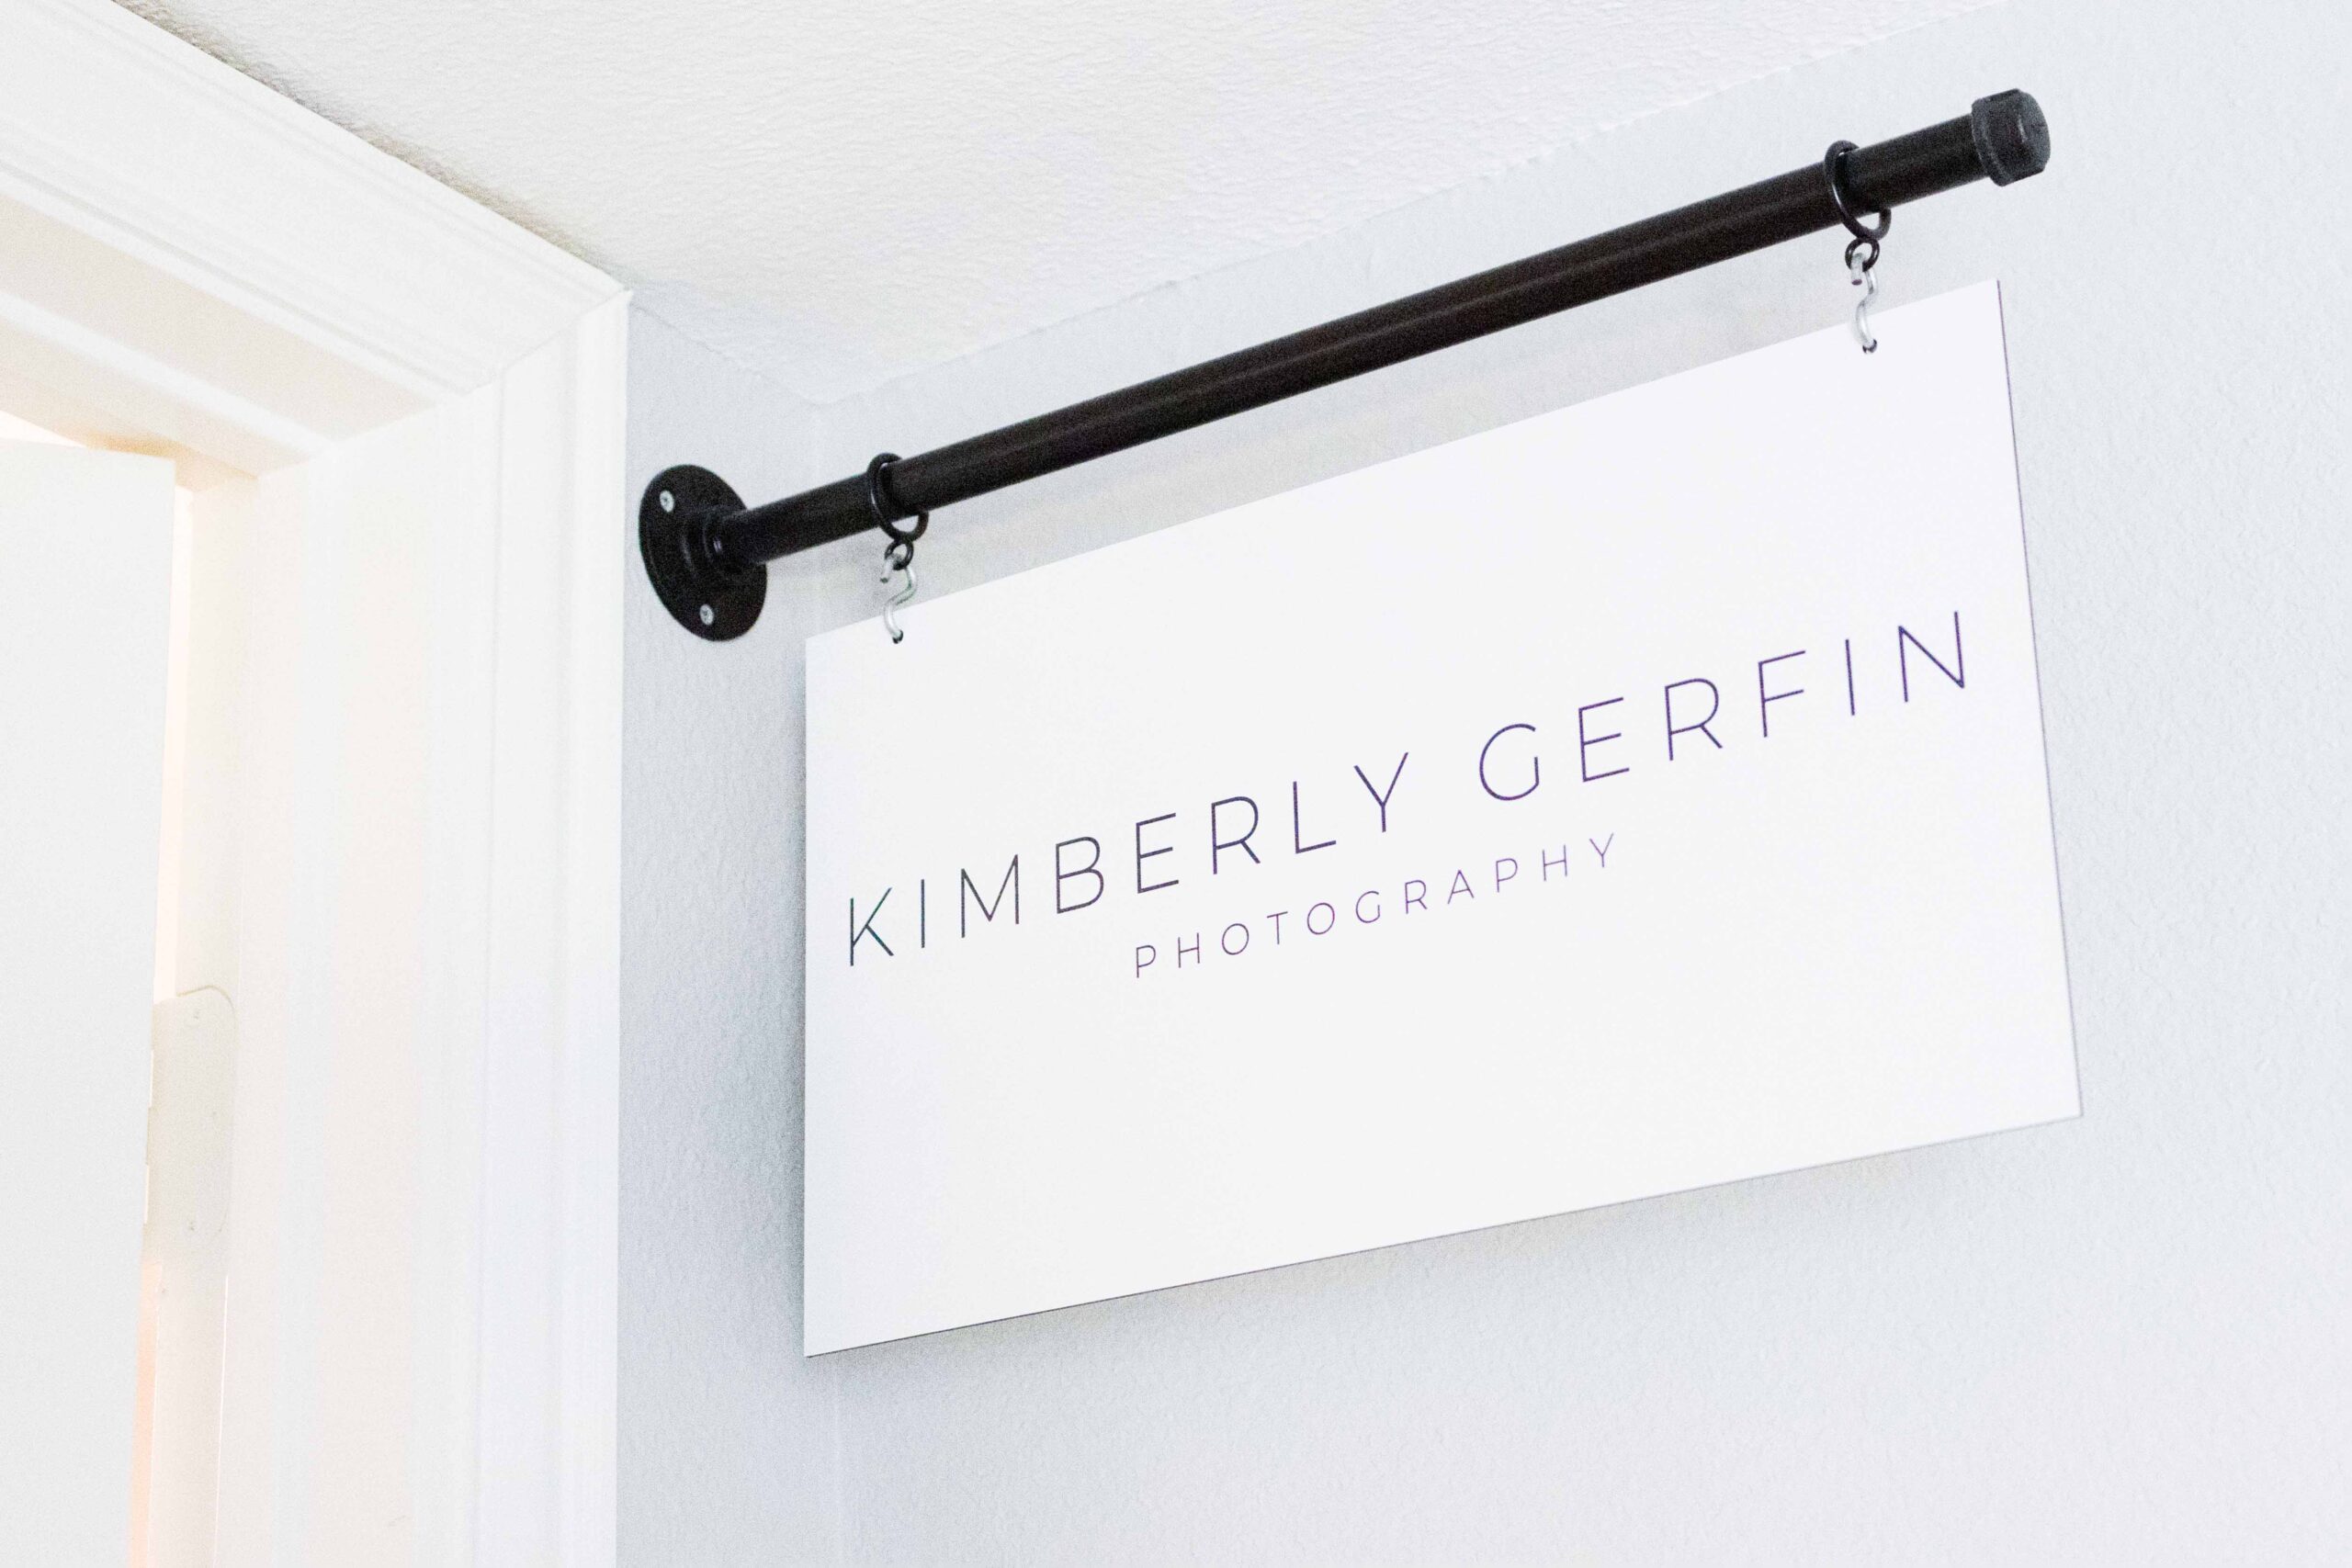 Kimberly Gerfin Photographer sign by Flower Mound Newborn Photographer